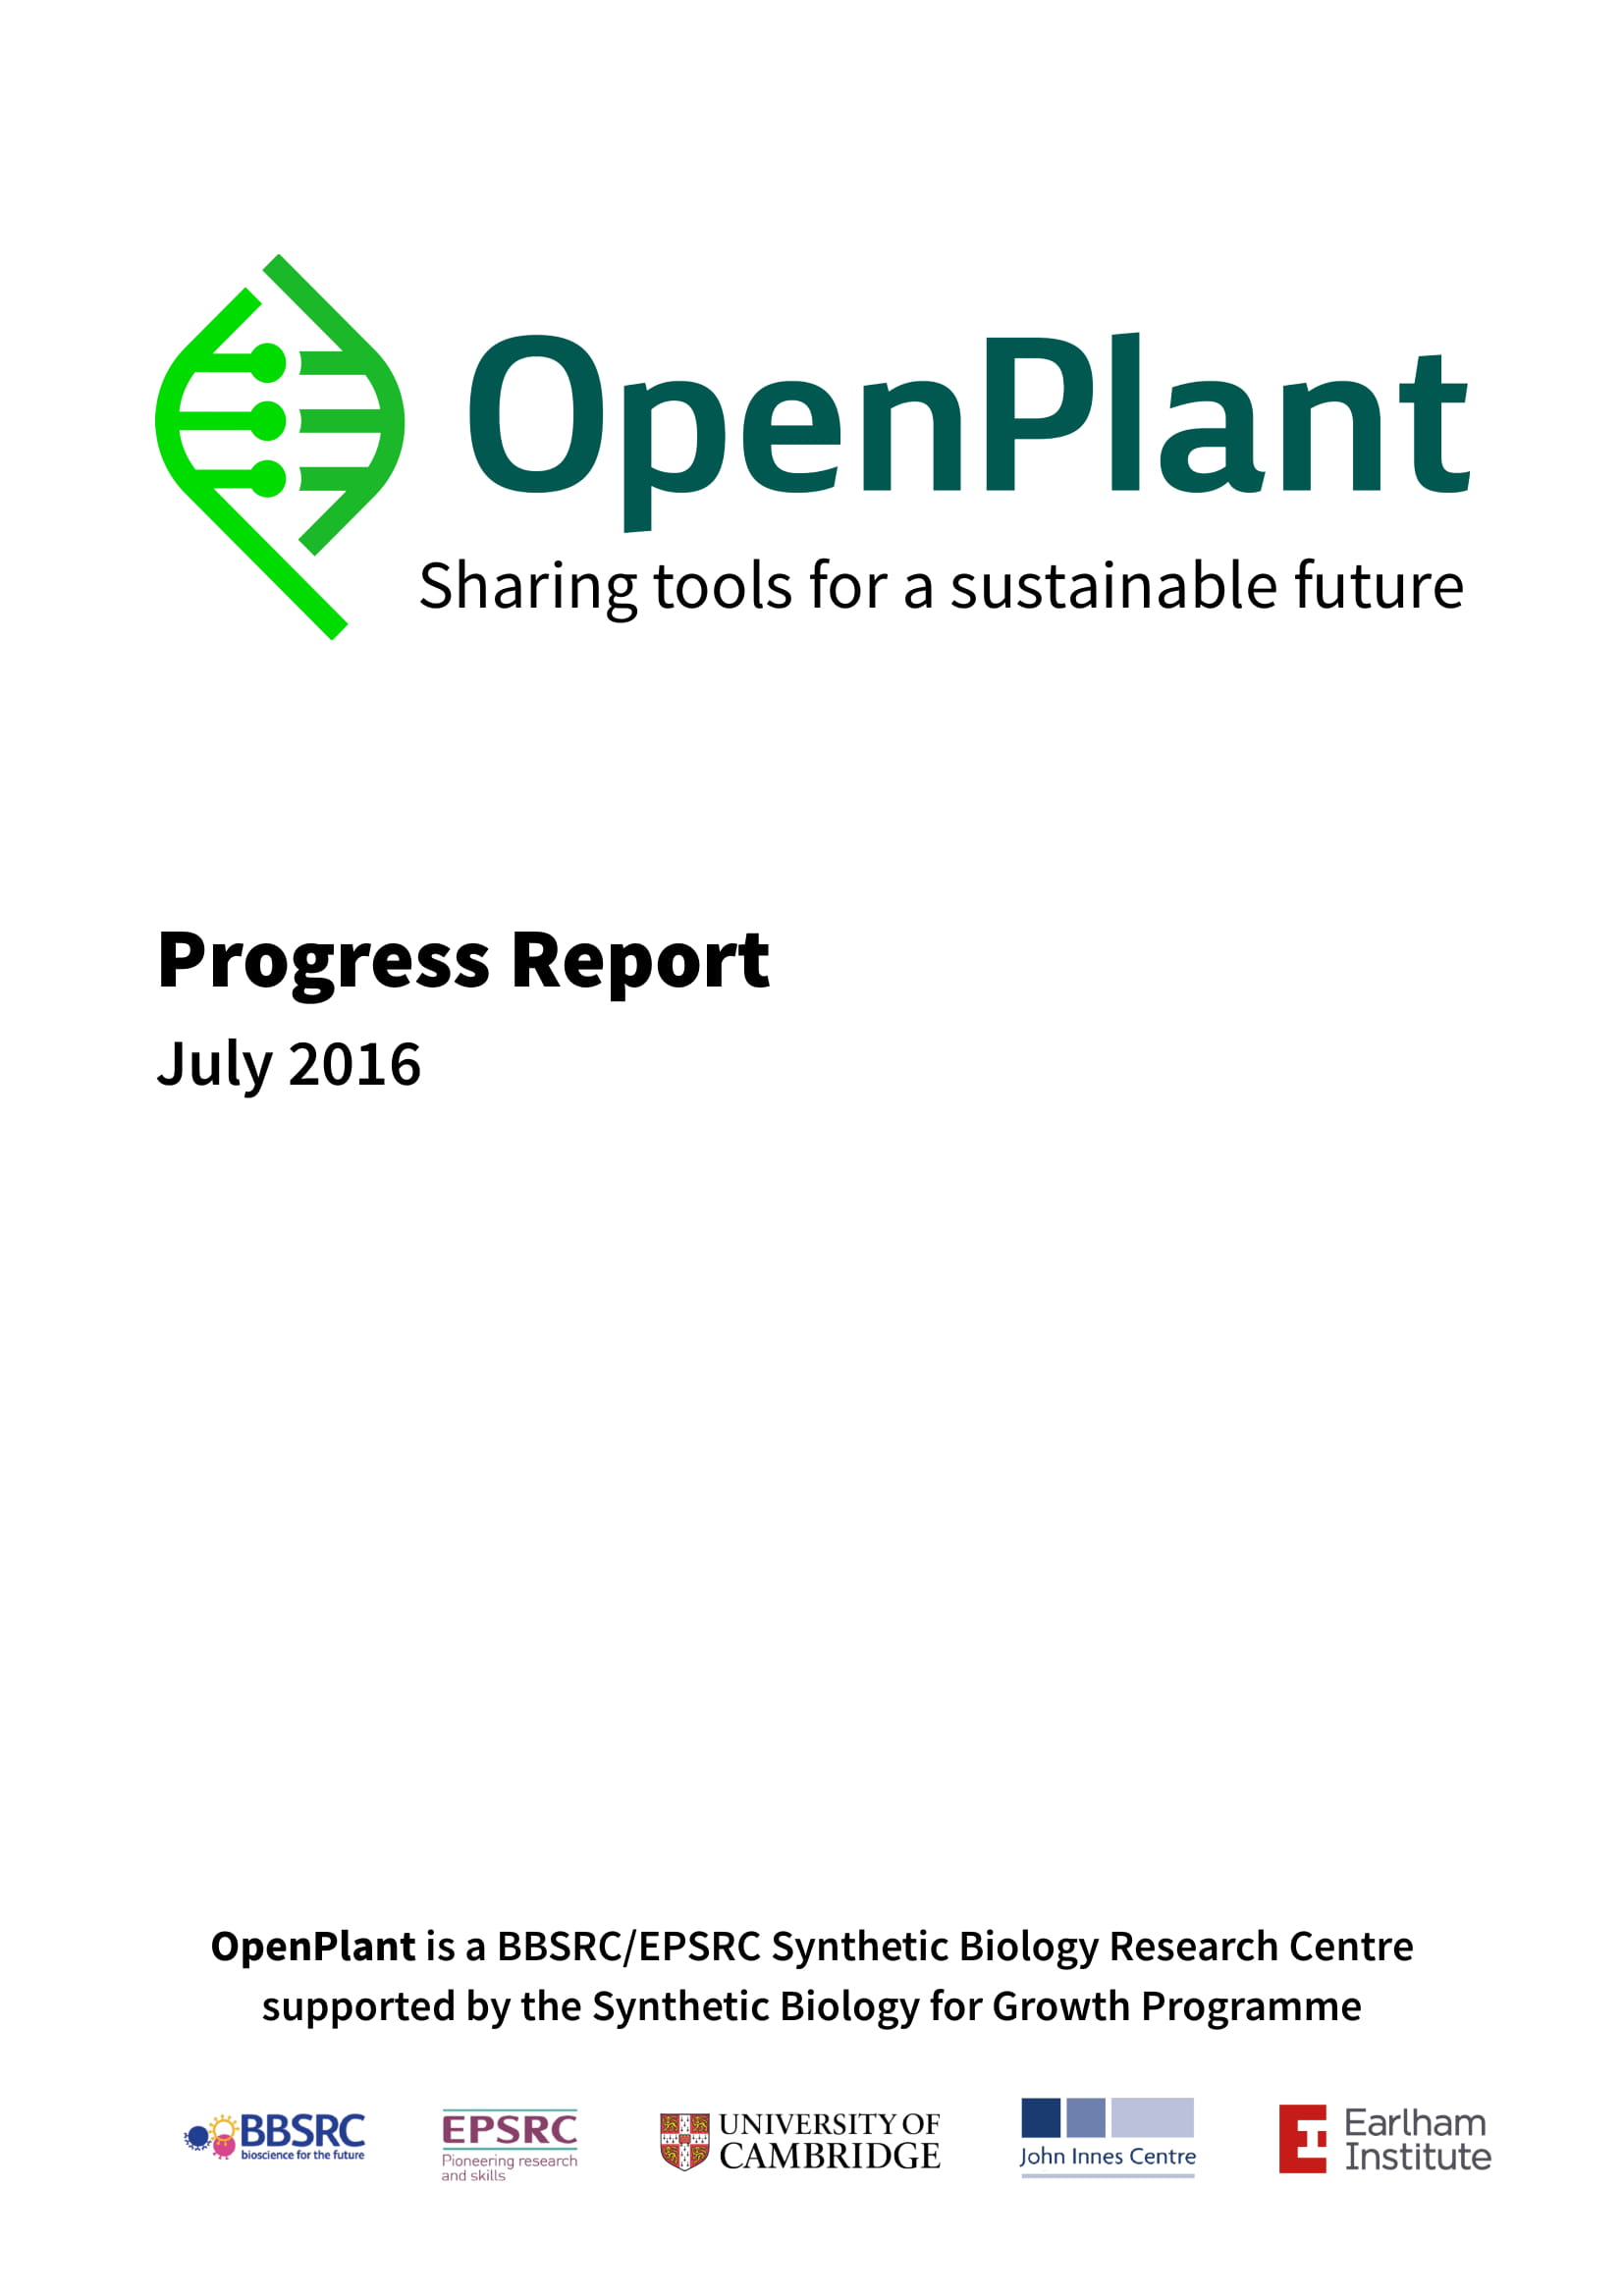 Progress Report 2016